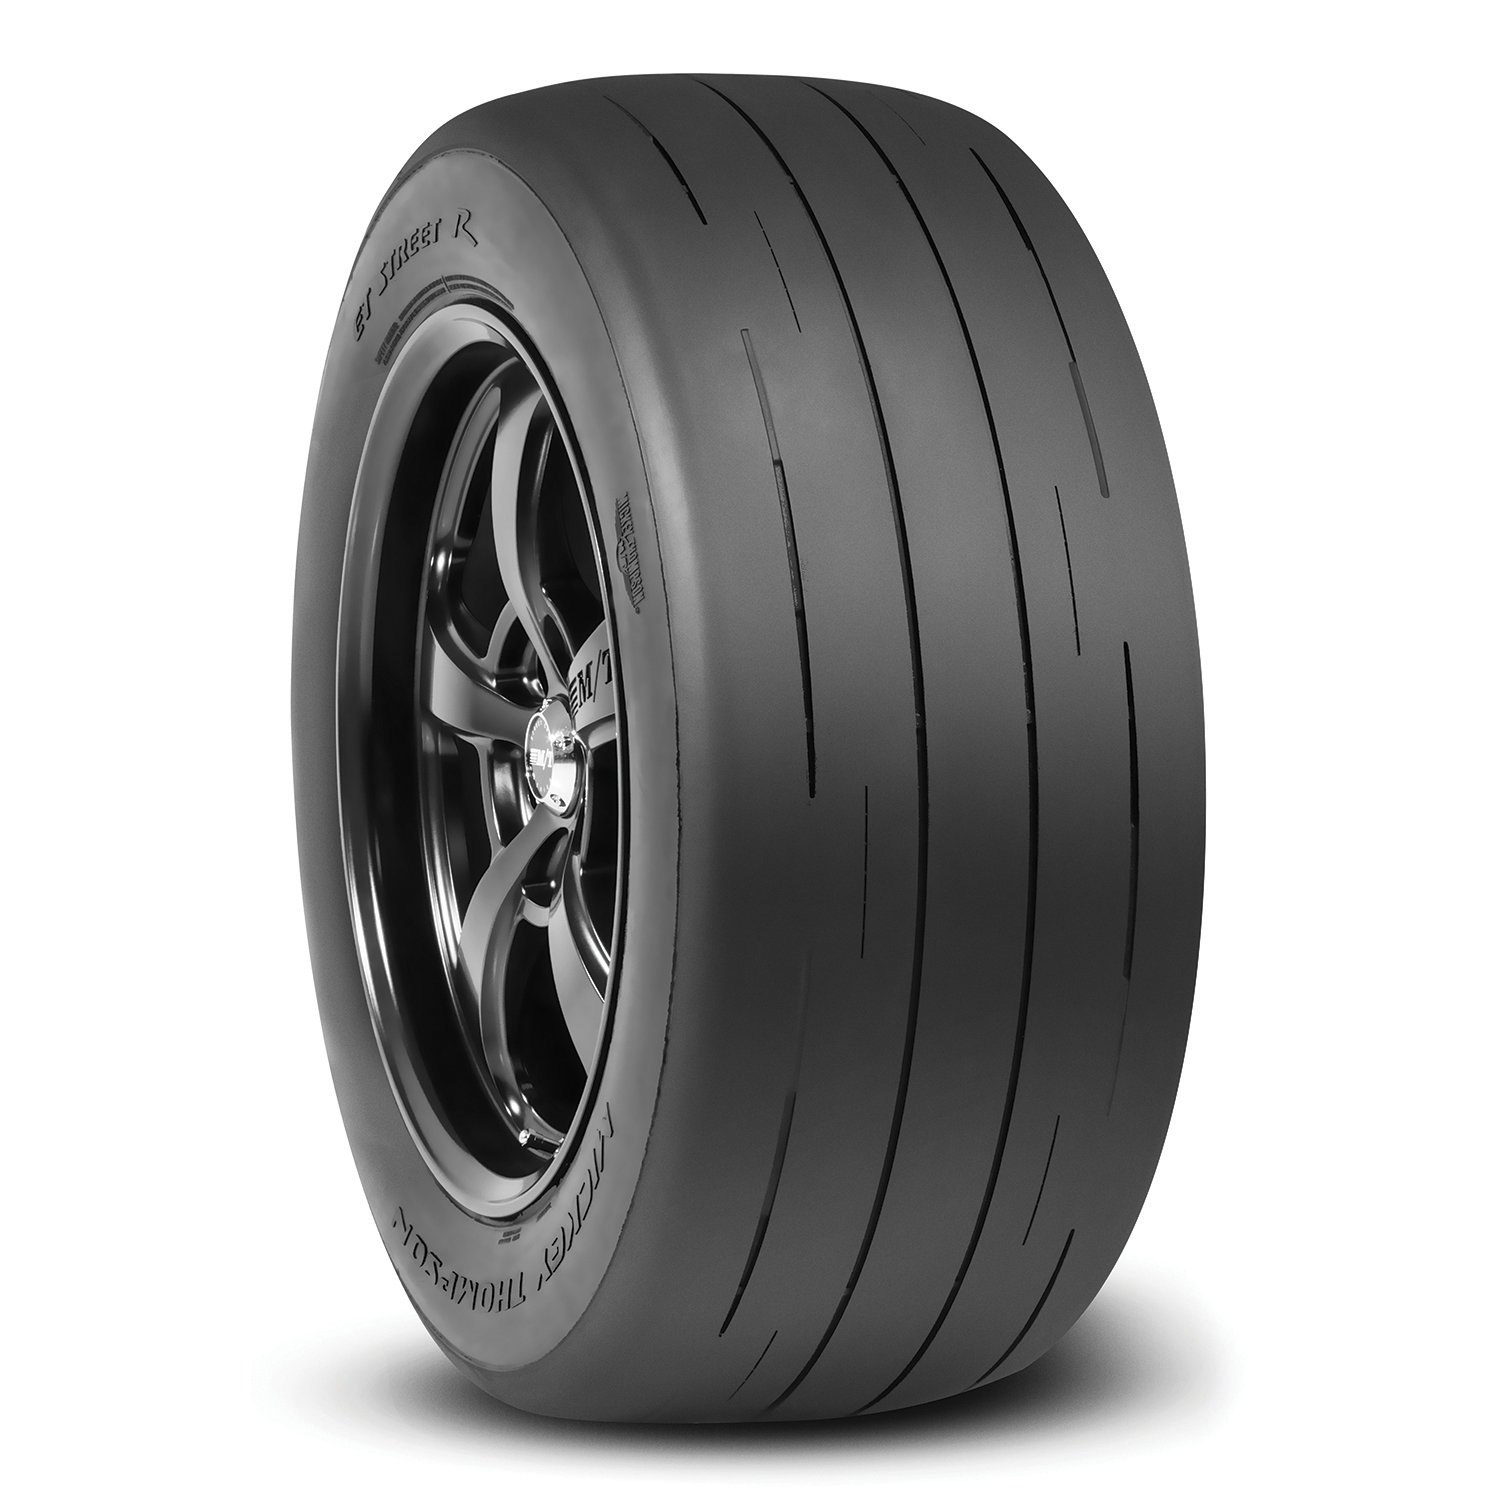 P275/60R15 ET Street R Radial Tire